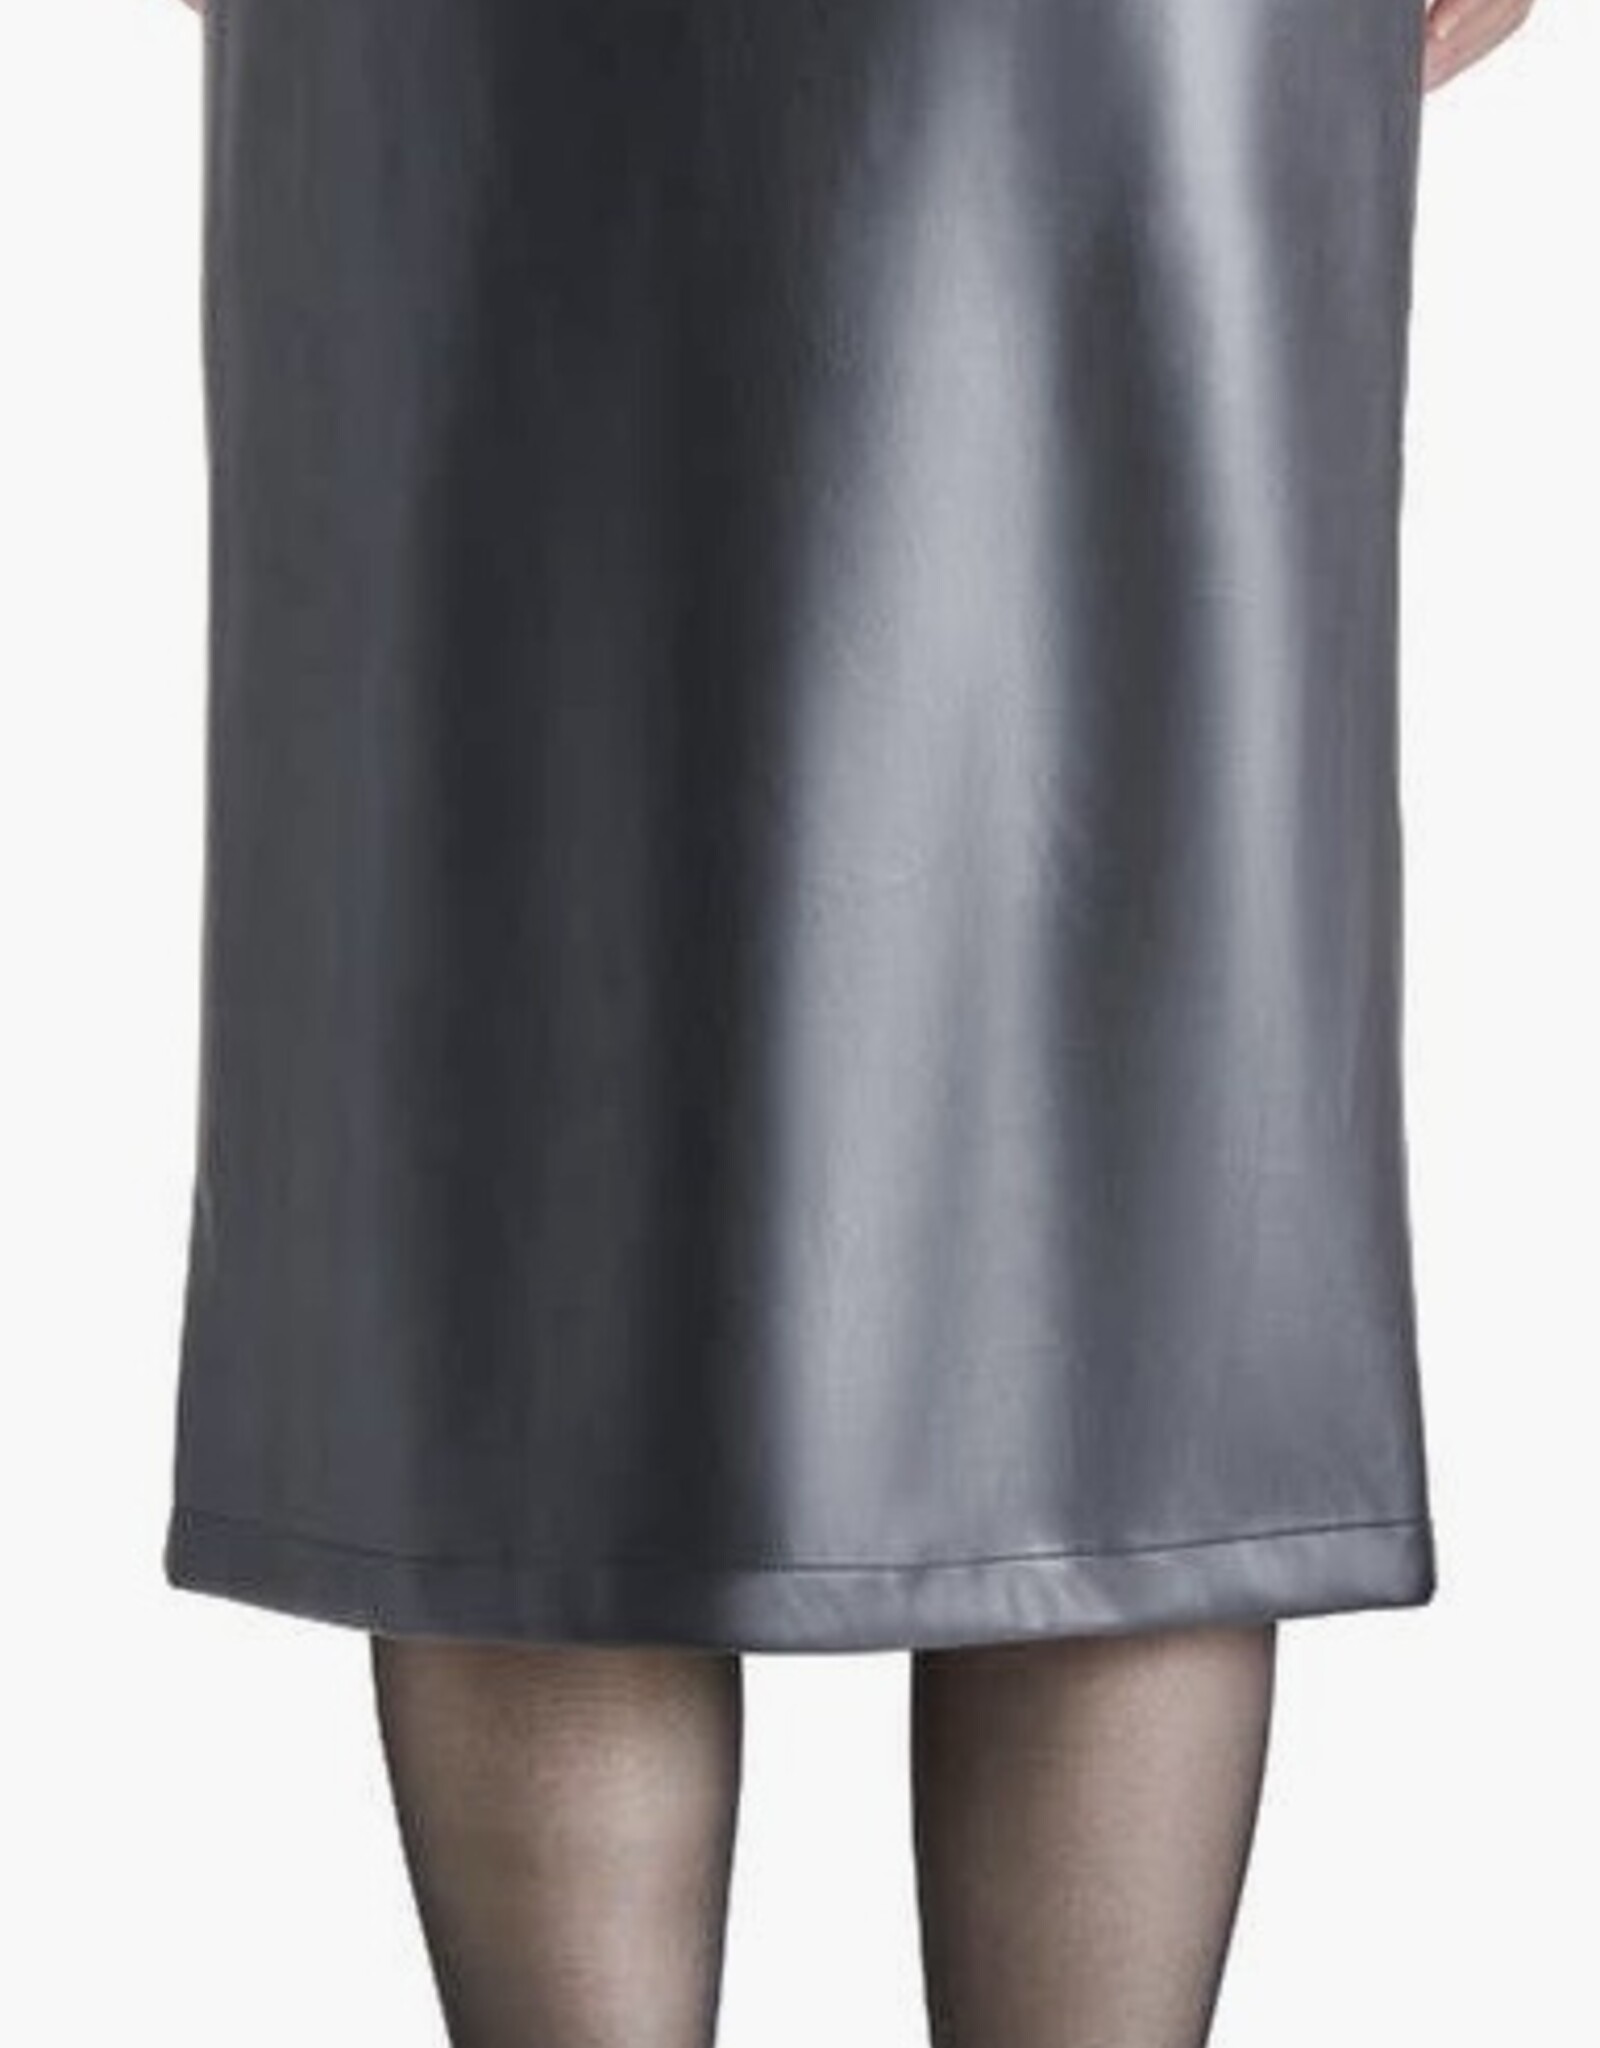 BB Dakota/Steve Madden Amarilla Skirt